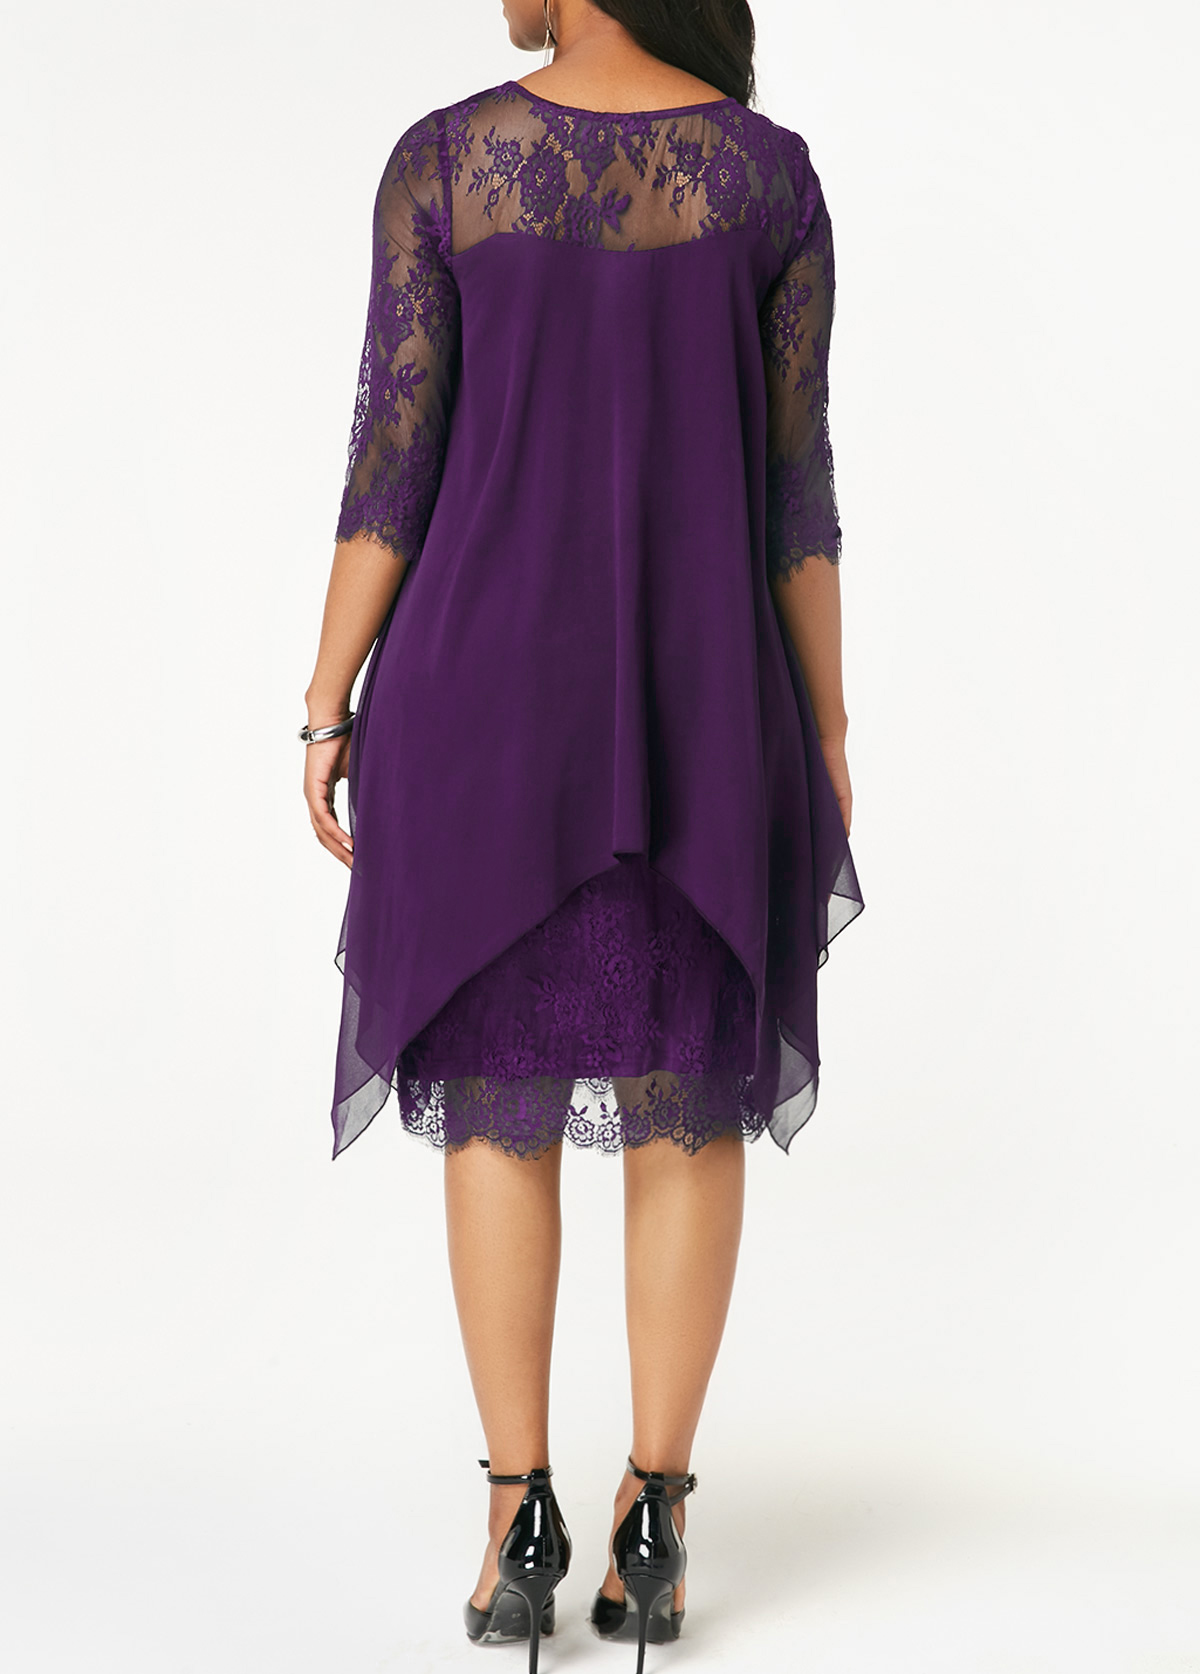 Chiffon Overlay Purple Three Quarter Sleeve Lace Dress